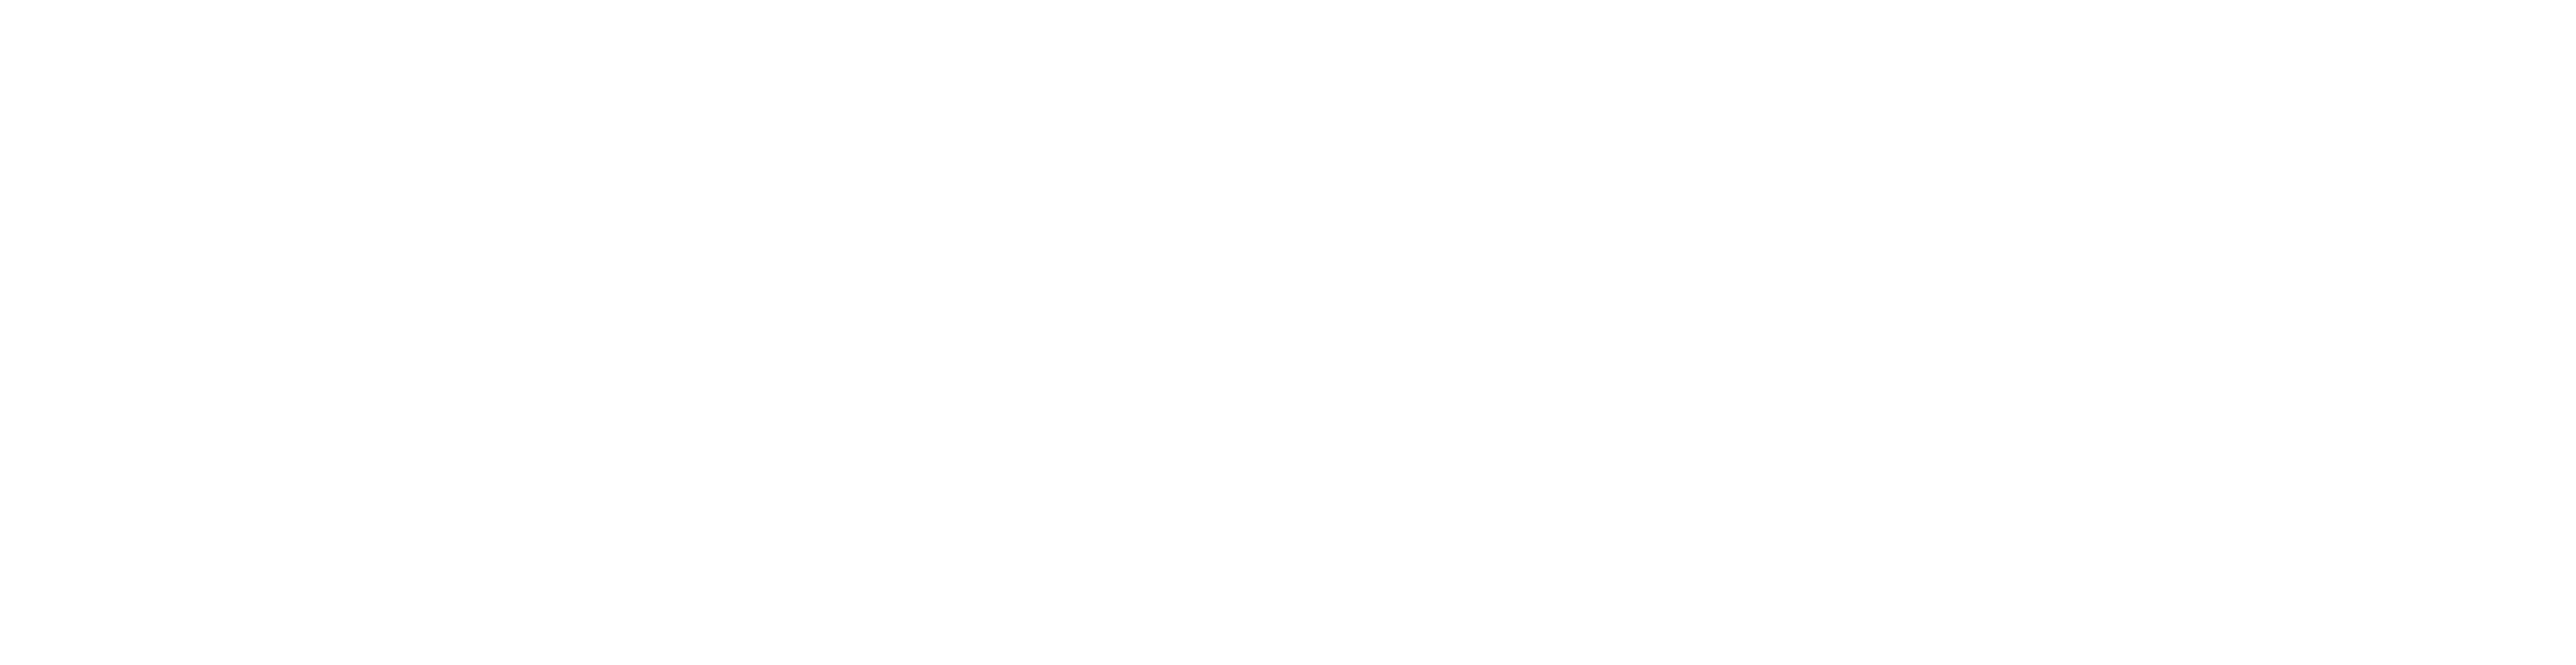 Gordon Ramsay: Uncharted logo